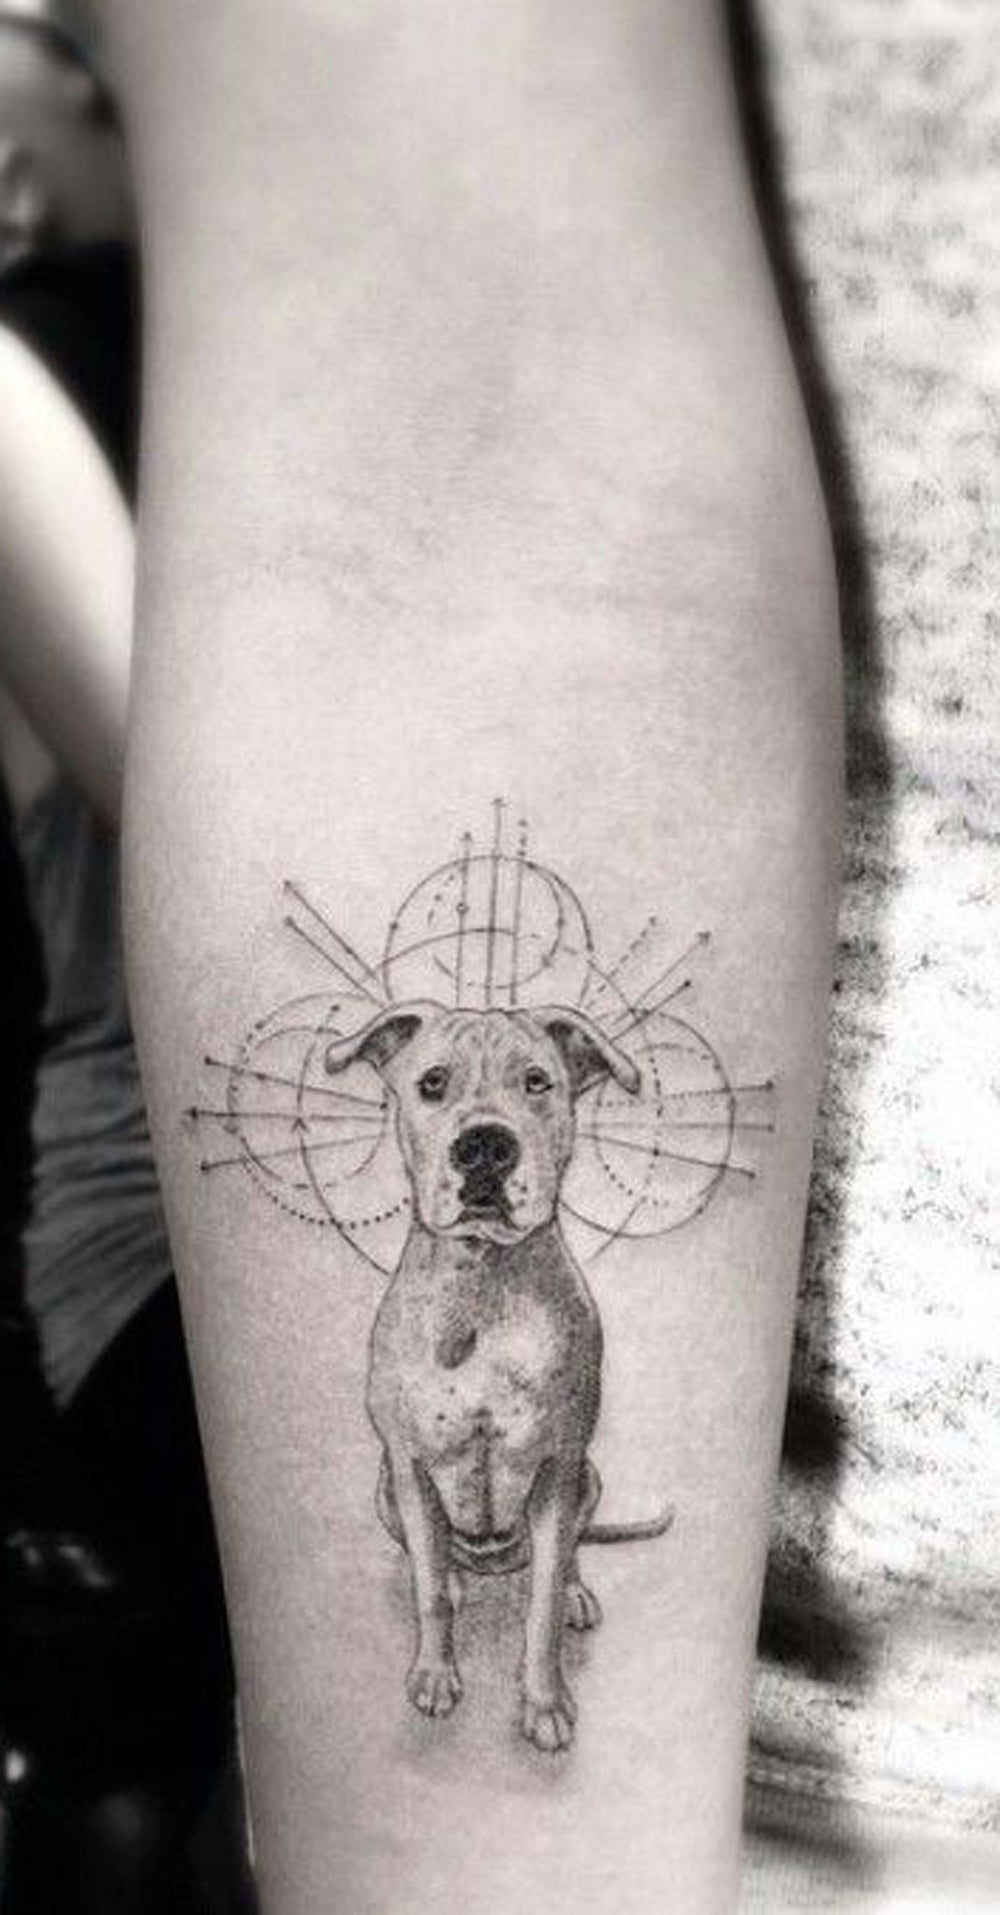 Geometric Realistic Forearm Dog Tattoo Ideas for Women -  Ideas geométrica realista del tatuaje del perro del antebrazo para las mujeres - www.MyBodiArt.com